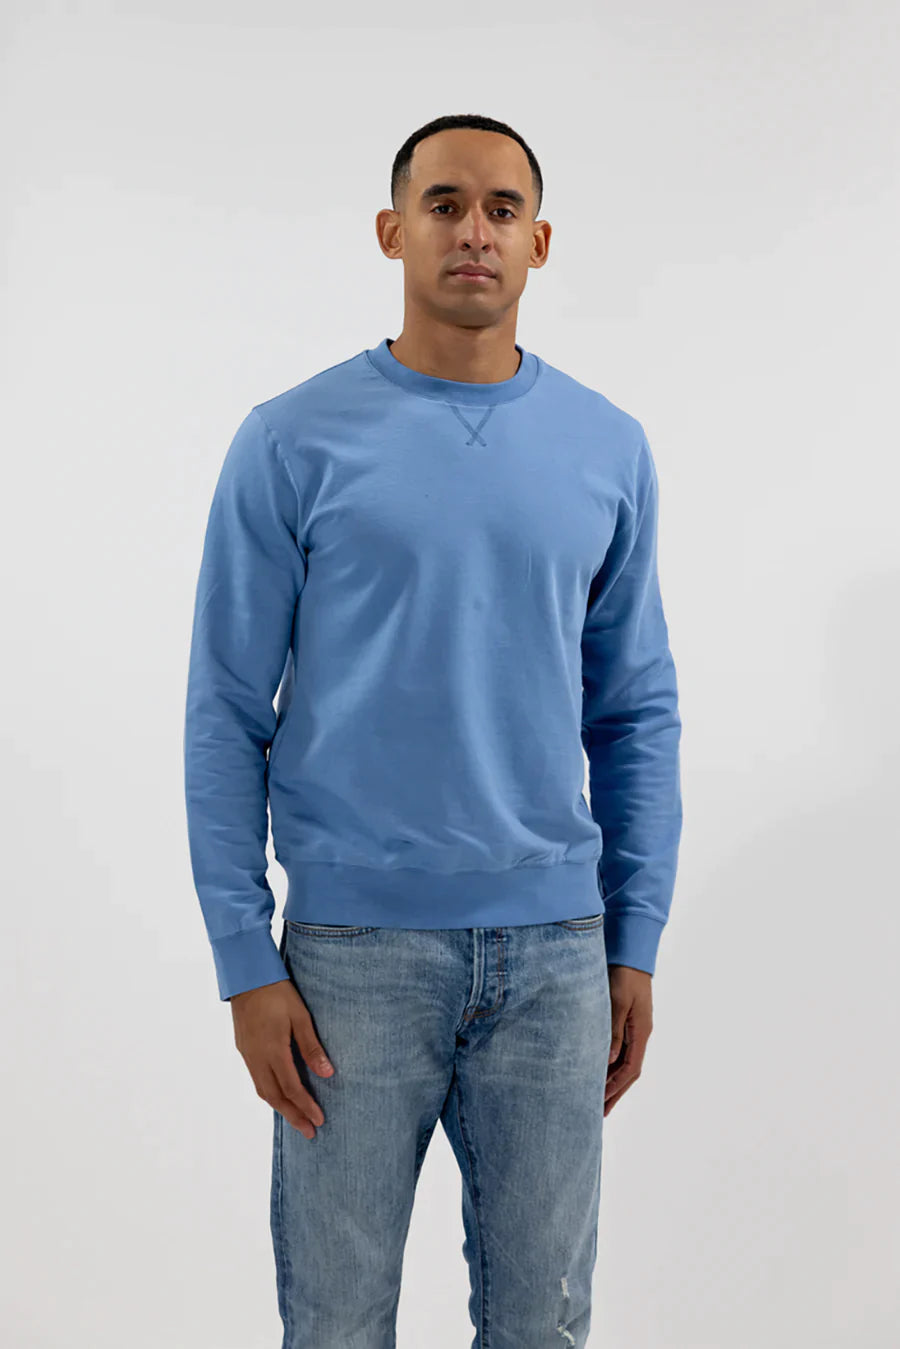 Easy Mondays Crew Neck Sweatshirt-Men's Sweatshirts-Sky Blue-L-Yaletown-Vancouver-Surrey-Canada